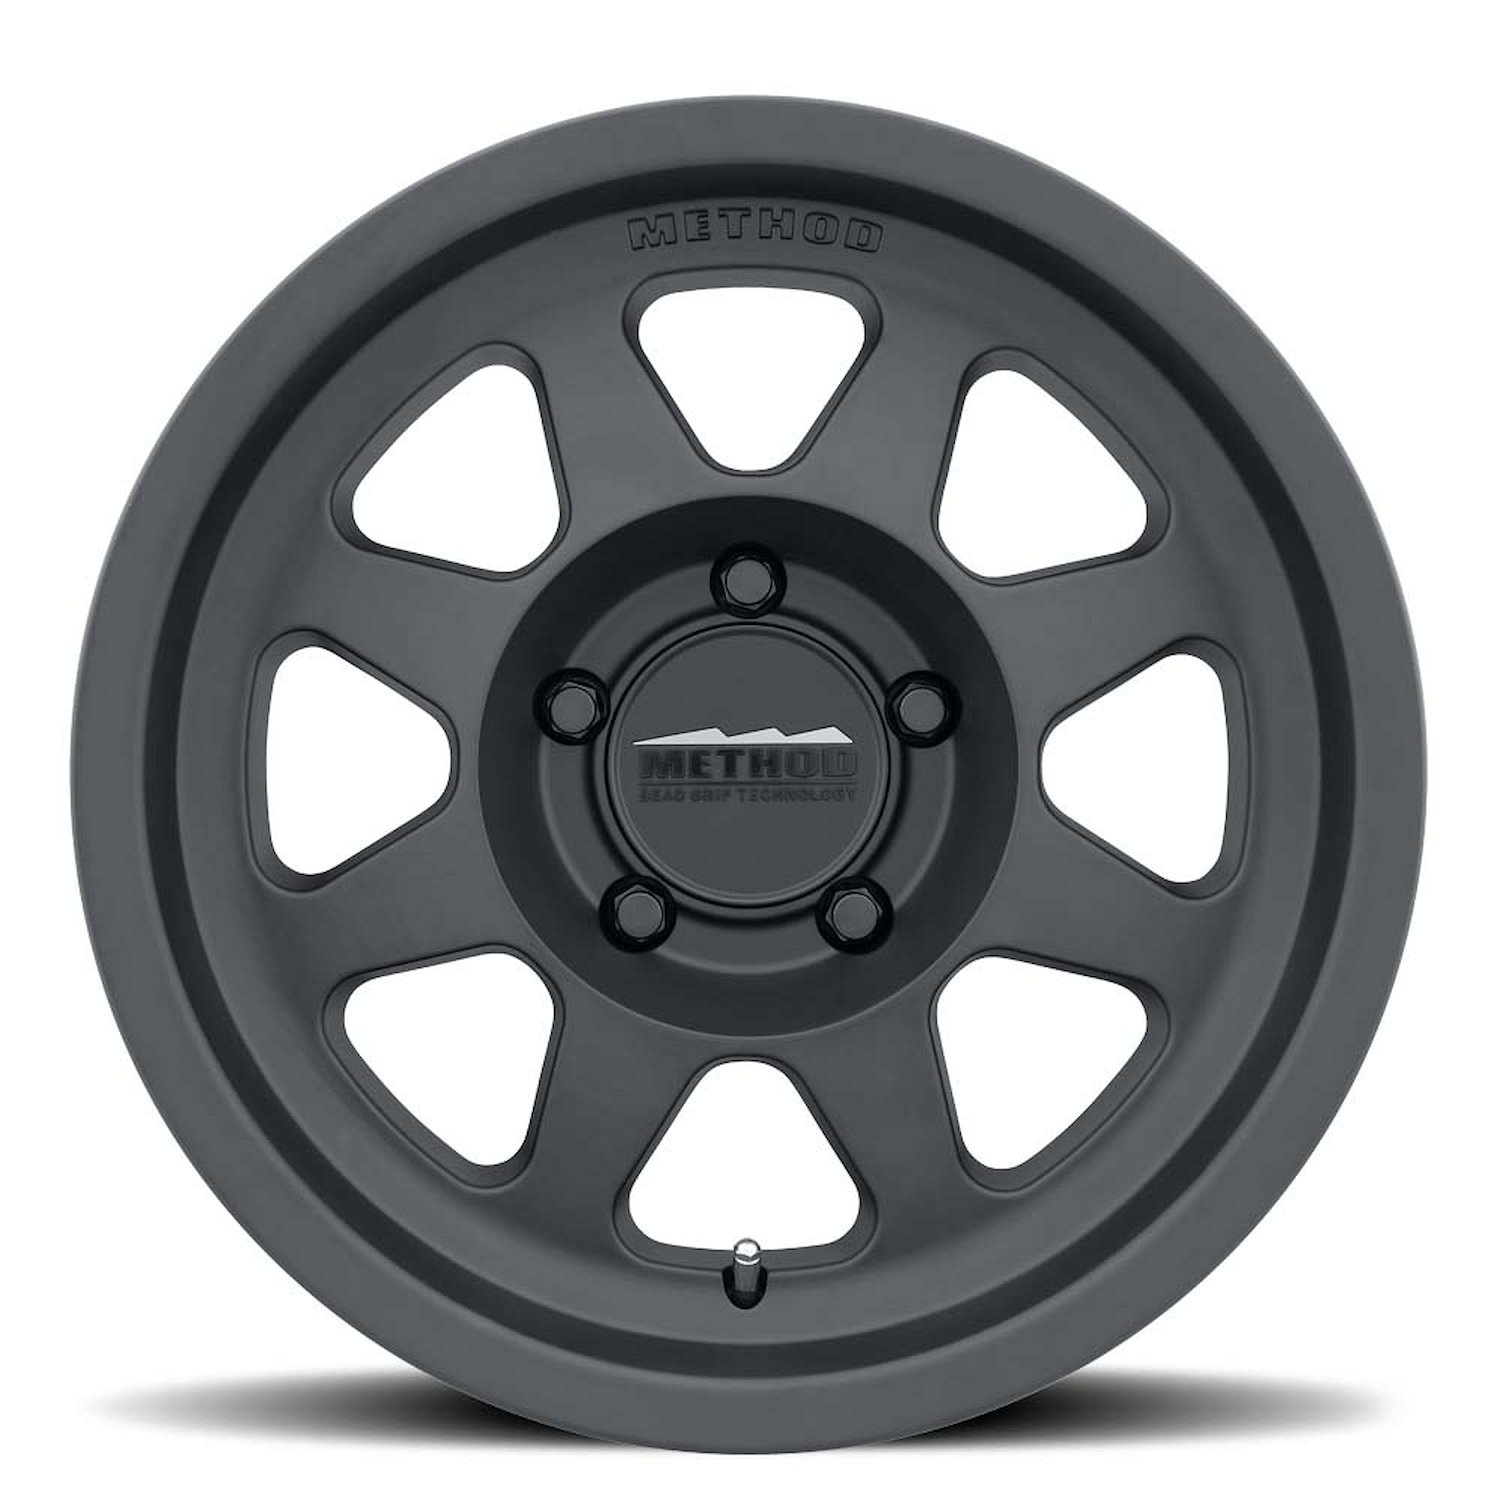 MR70178555500 TRAIL MR701 Bead Grip Wheel [Size: 17" x 8.5"] Matte Black